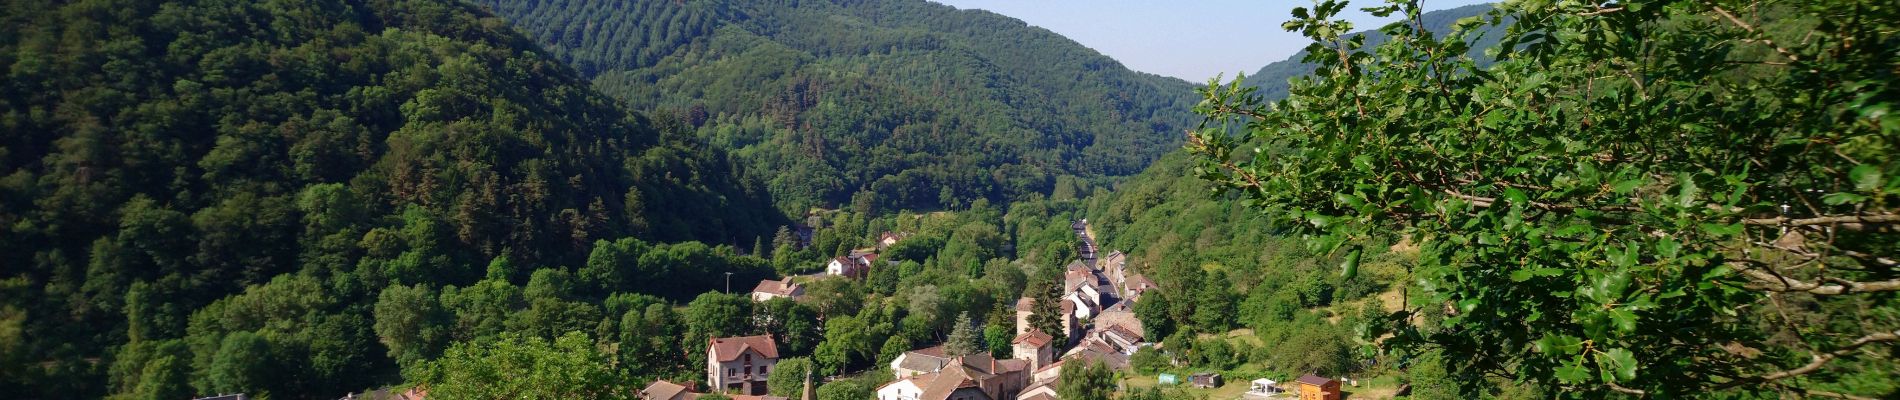 Percorso Marcia Ferrières-Saint-Mary - Cantal - Ferrières-Saint-Mary - Gorges de la Bouzaire - 7.7km 350m 2h50 - 2019 07 01 - Photo